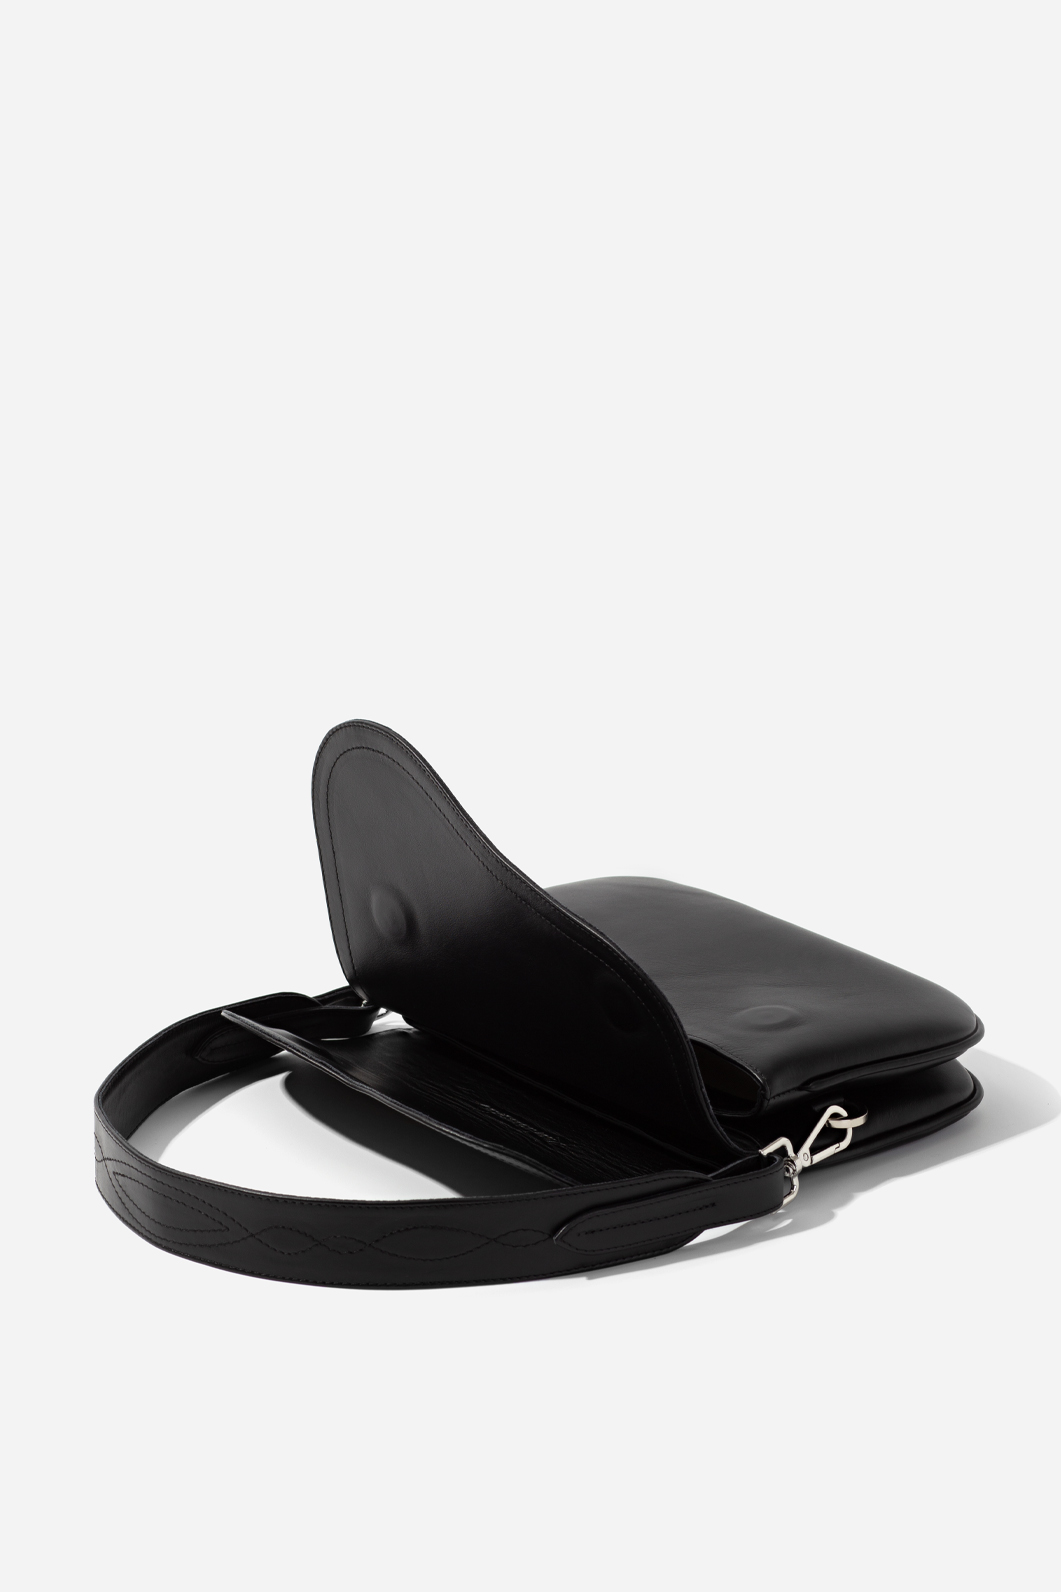 Saddle bag 2
black leather crossbody /silver/